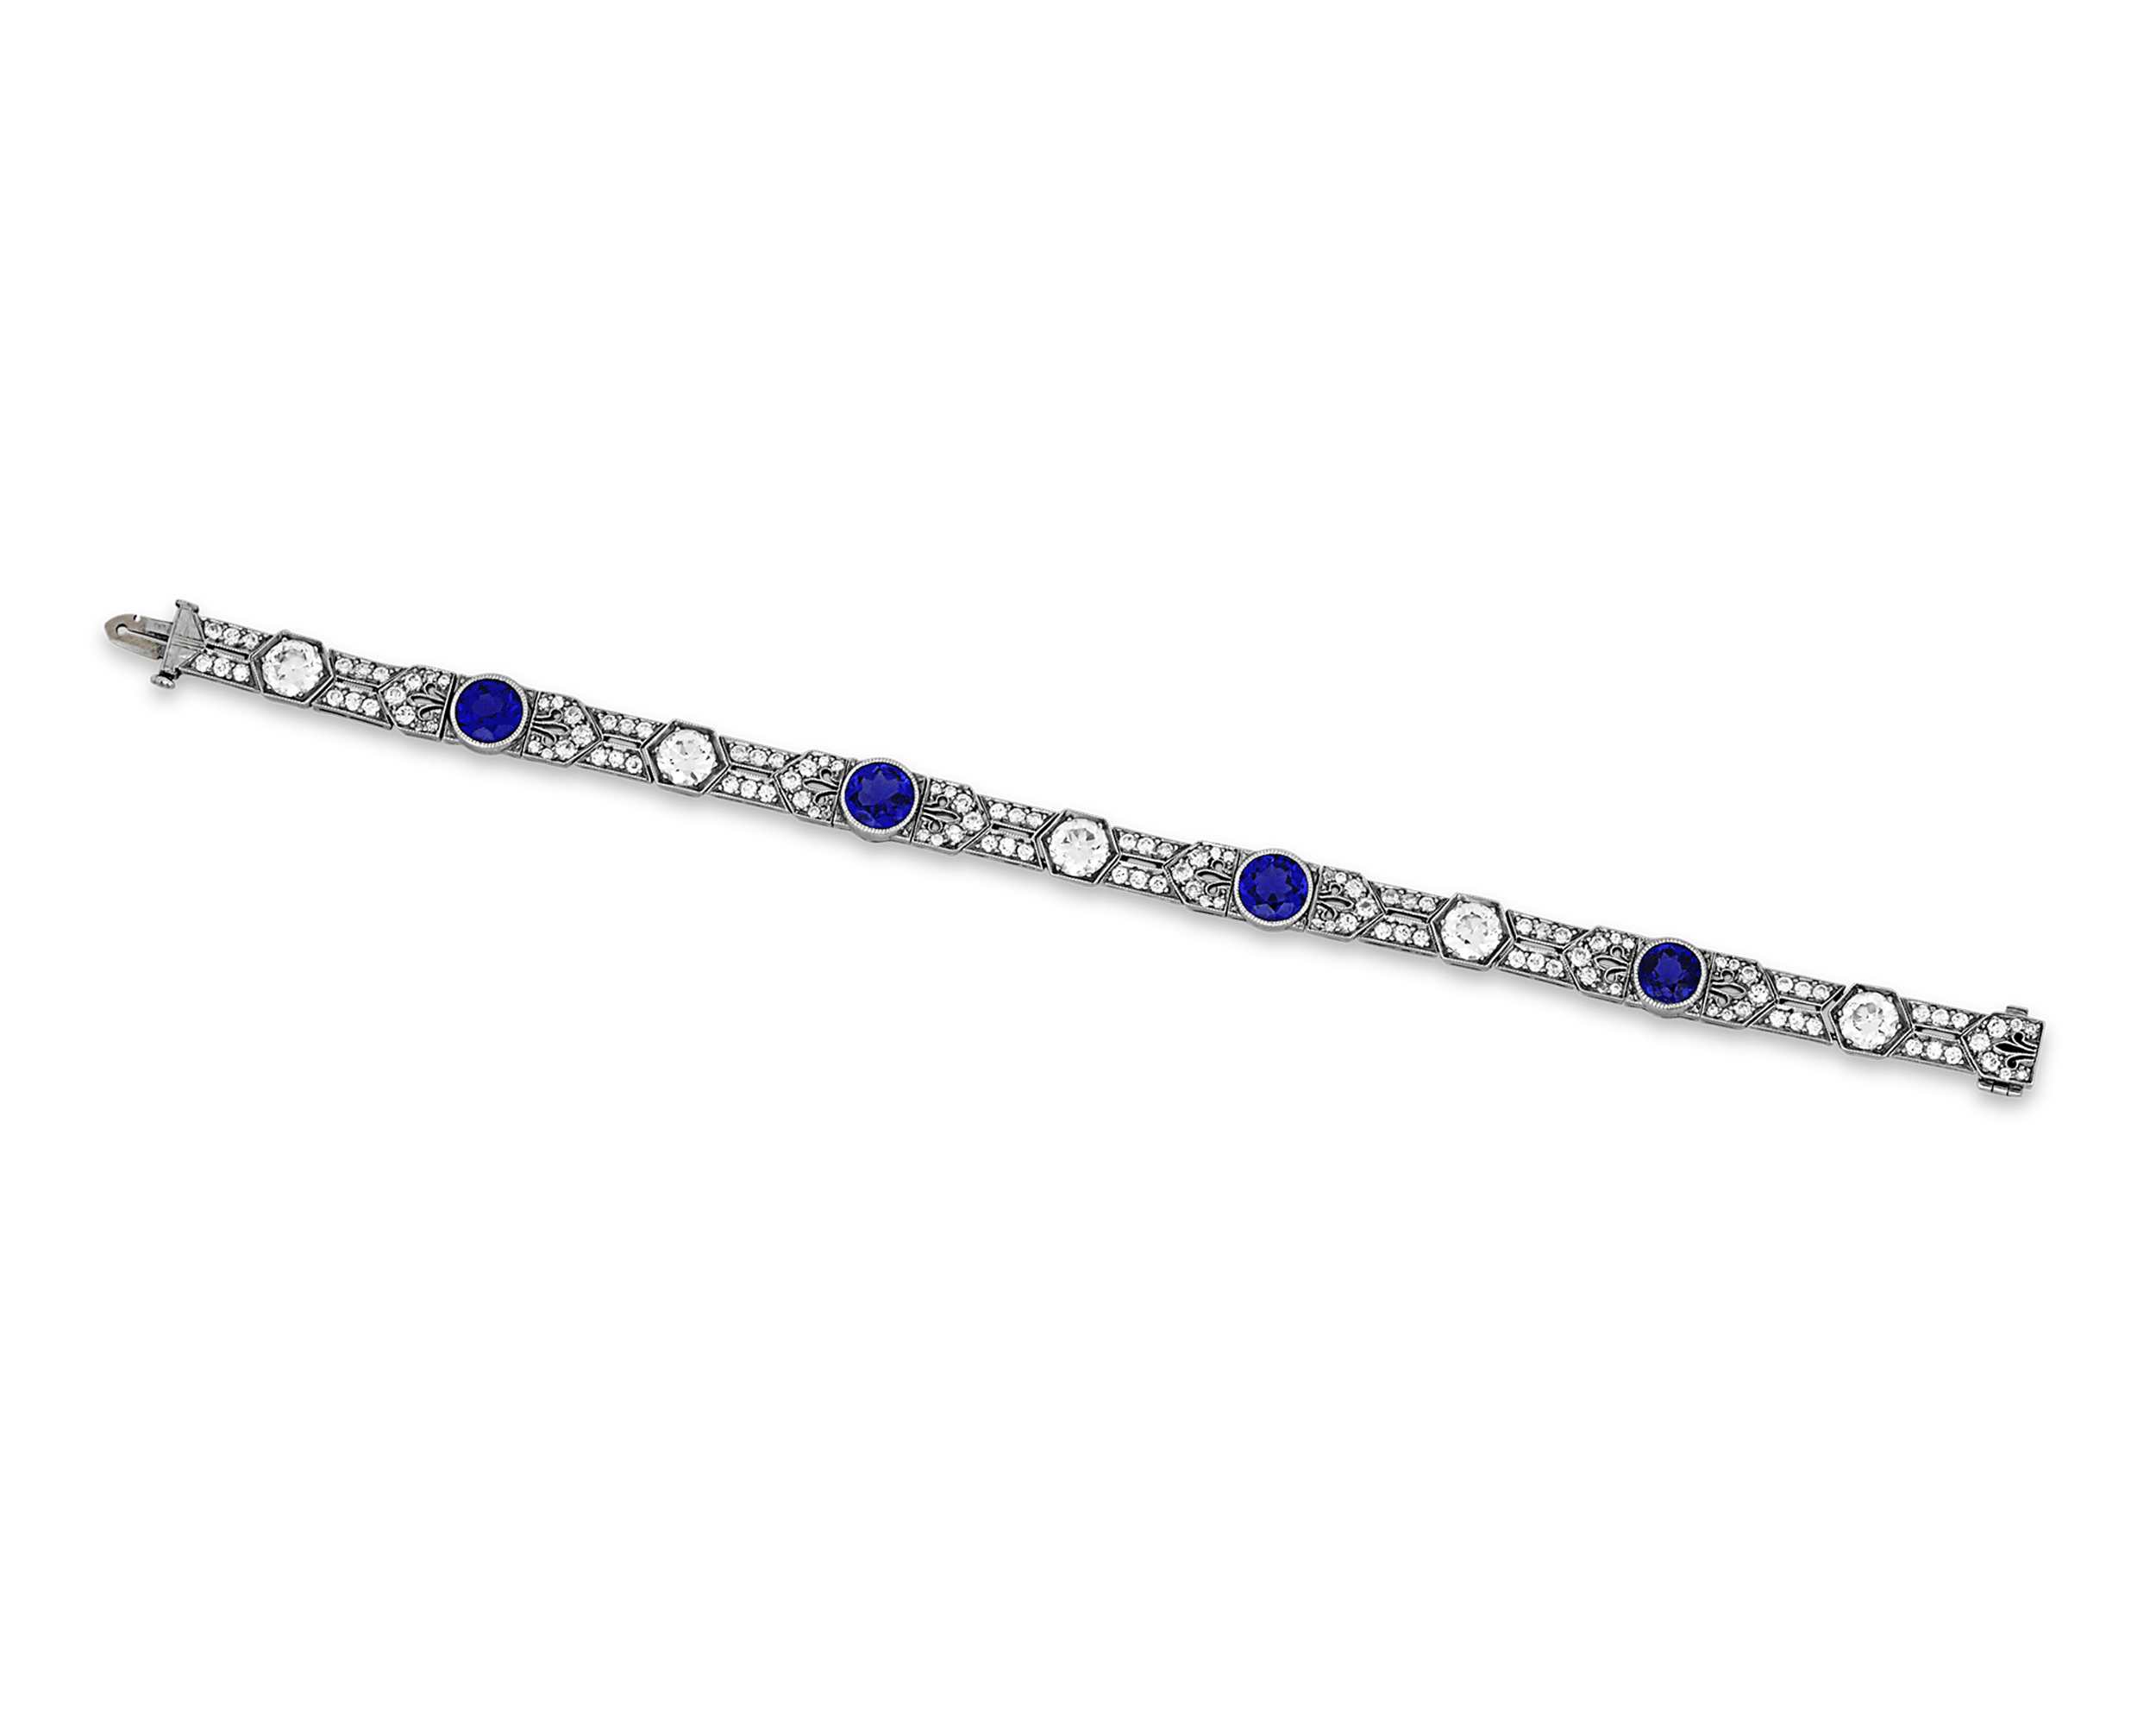 Tiffany & Co. Untreated Yogo Sapphire Bracelet, 4.68 Carats